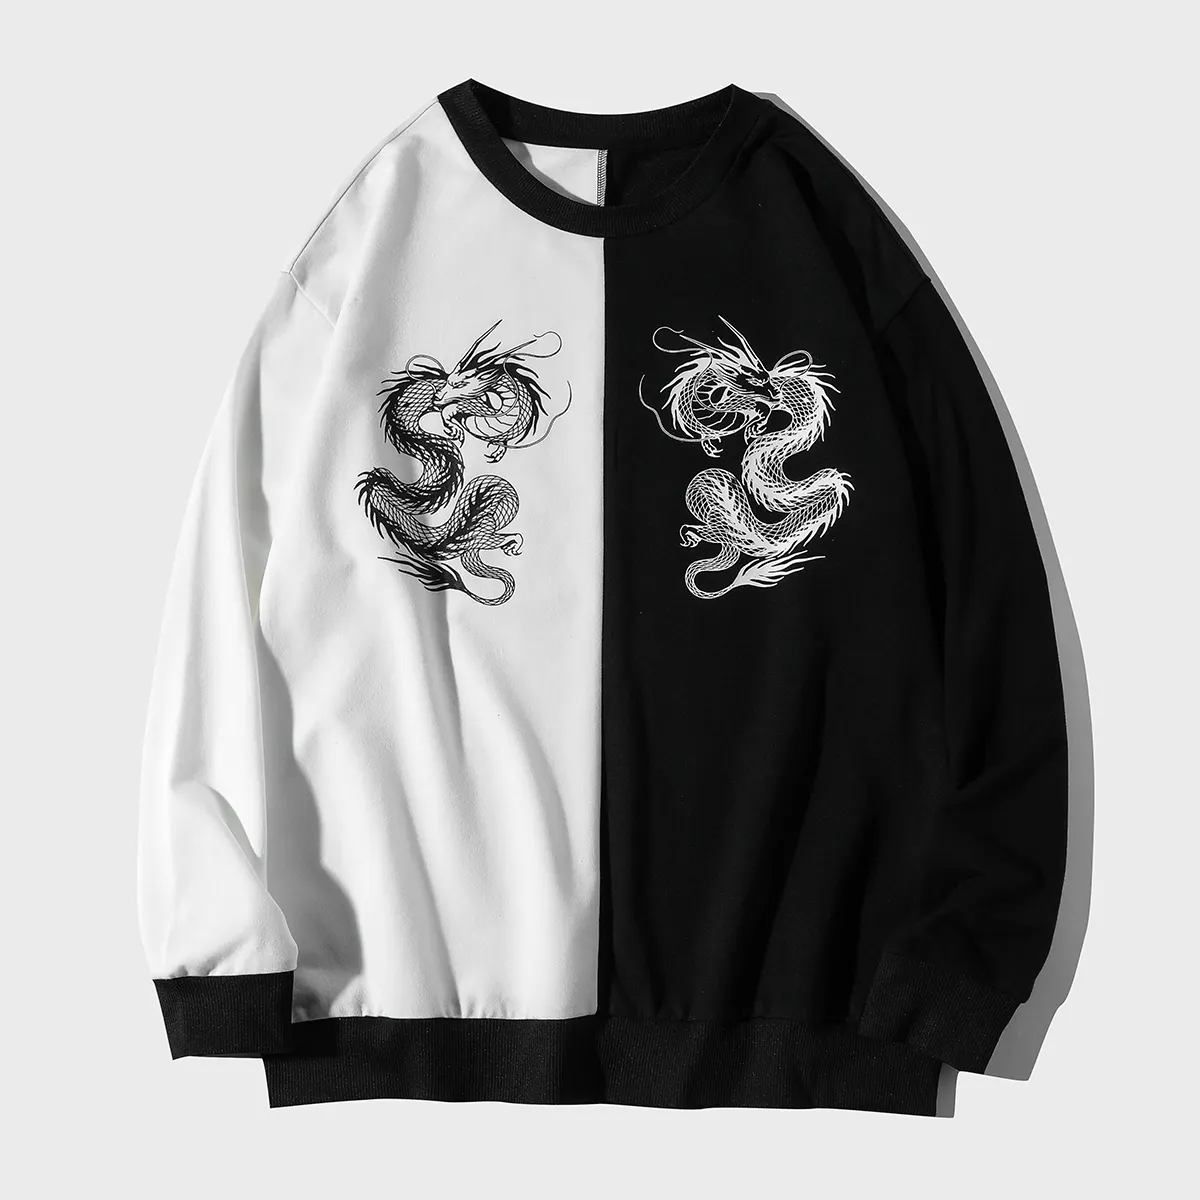 Designer new black and white contrast Colorblock sweatshirt printing Chinese dragon casual men's Luxury sweatshirt